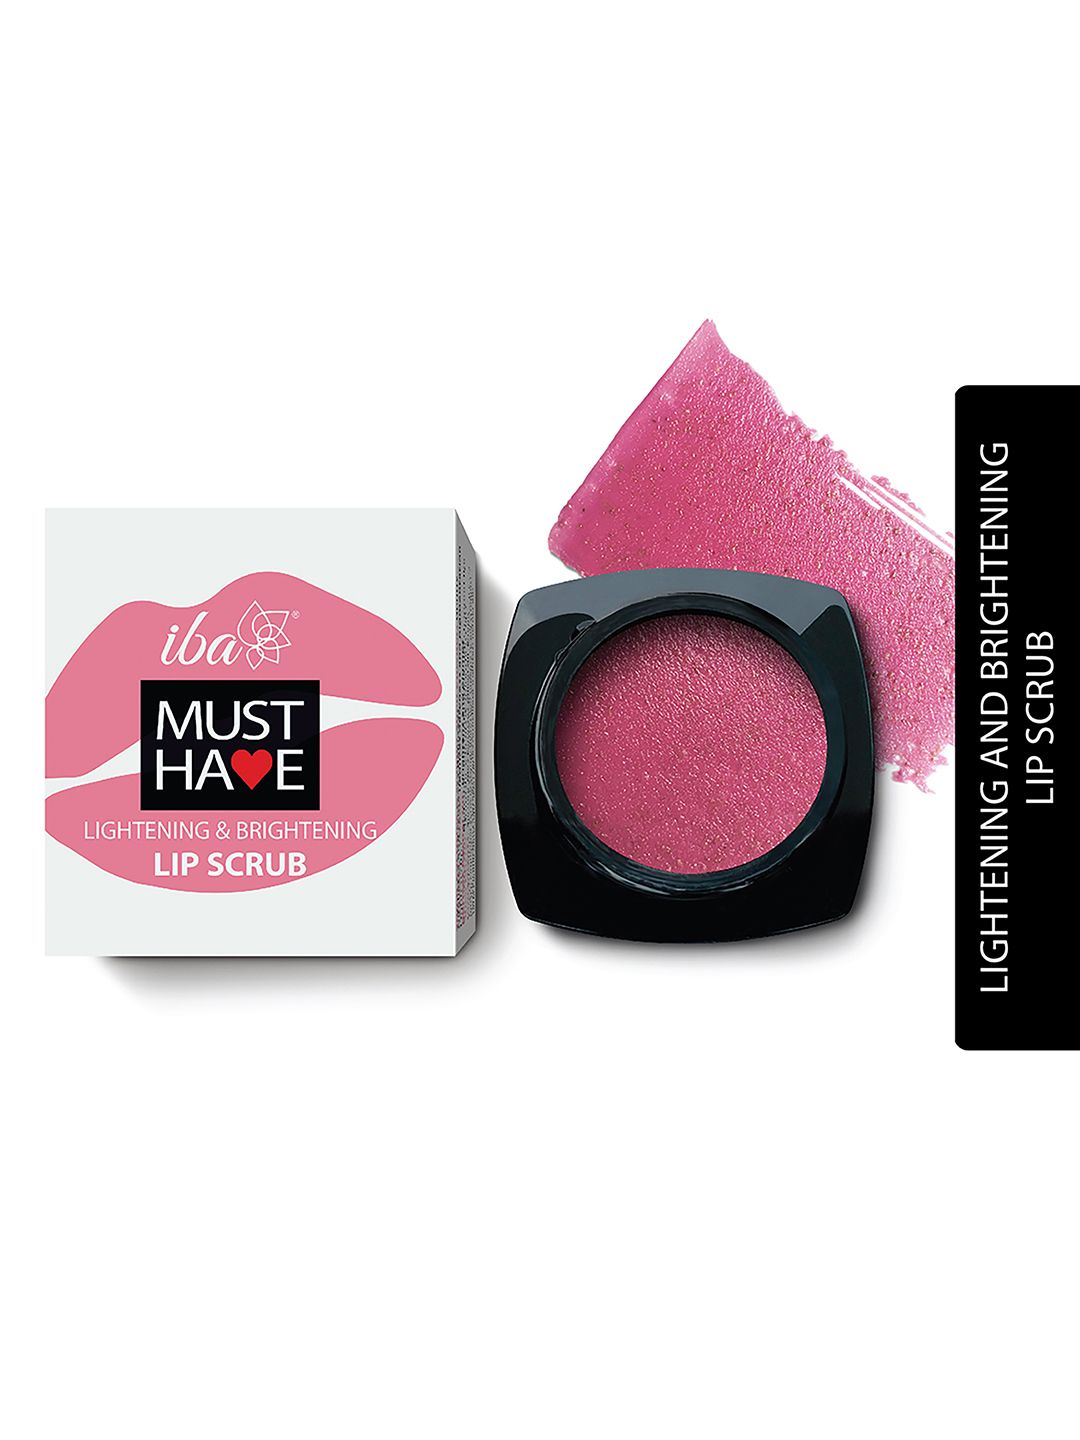 Iba Pink Must Have Lightening & Brightening Lip Scrub 8g Price in India